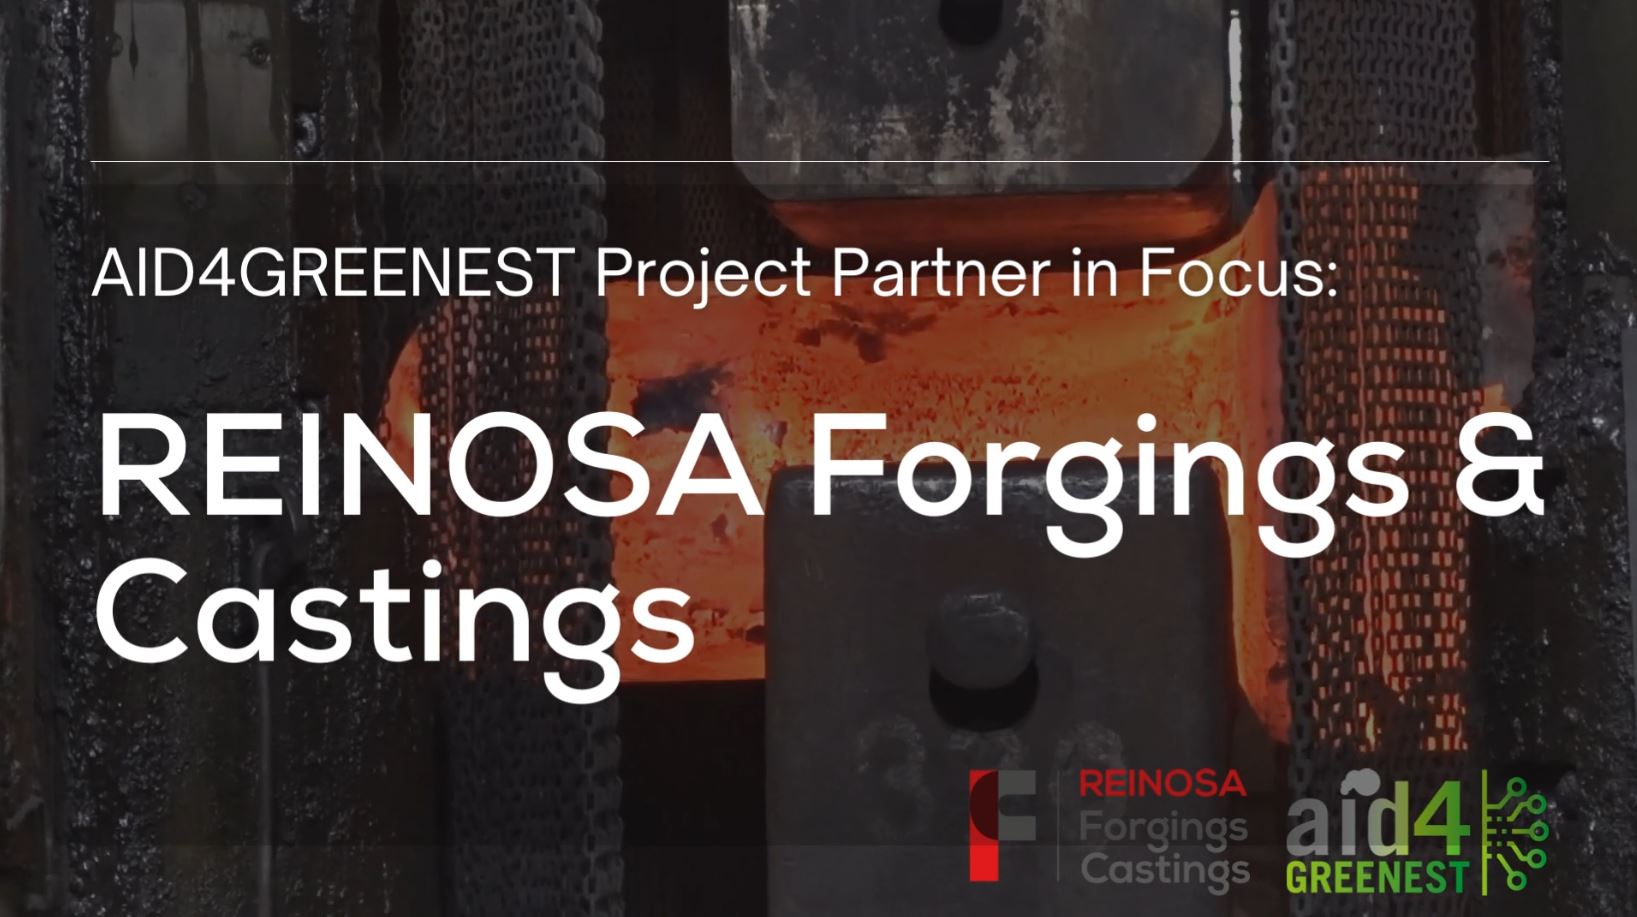 REINOSA Forgings & Castings: AID4GREENEST Project Partner in Focus